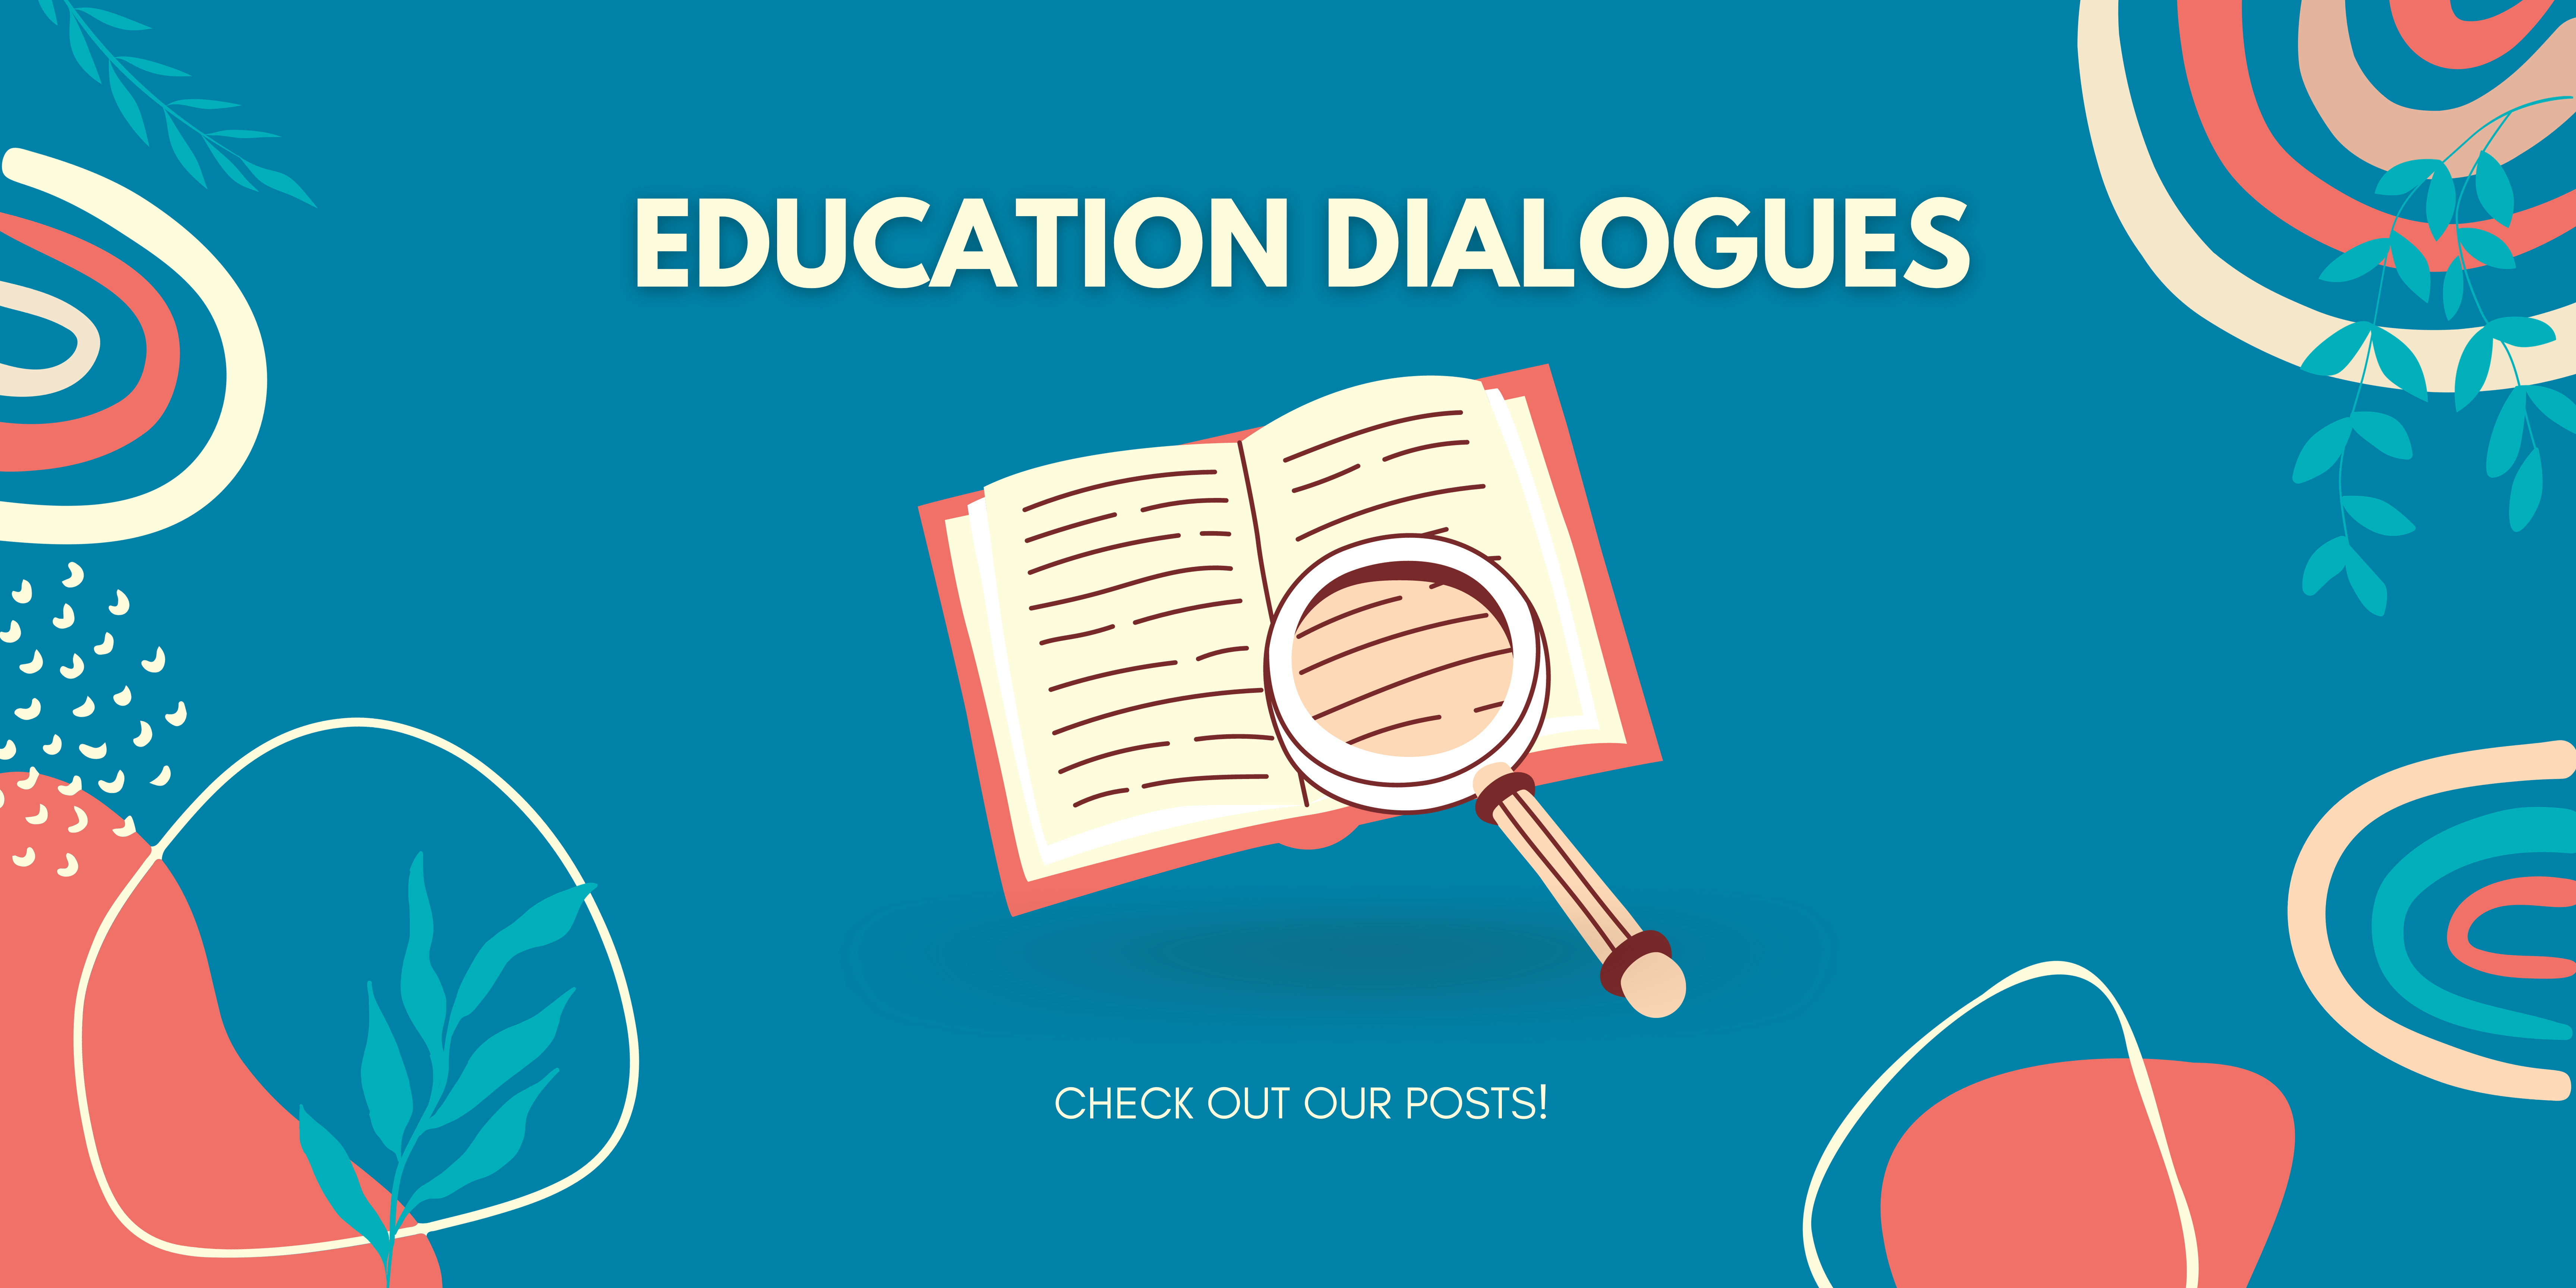 Education dialogues